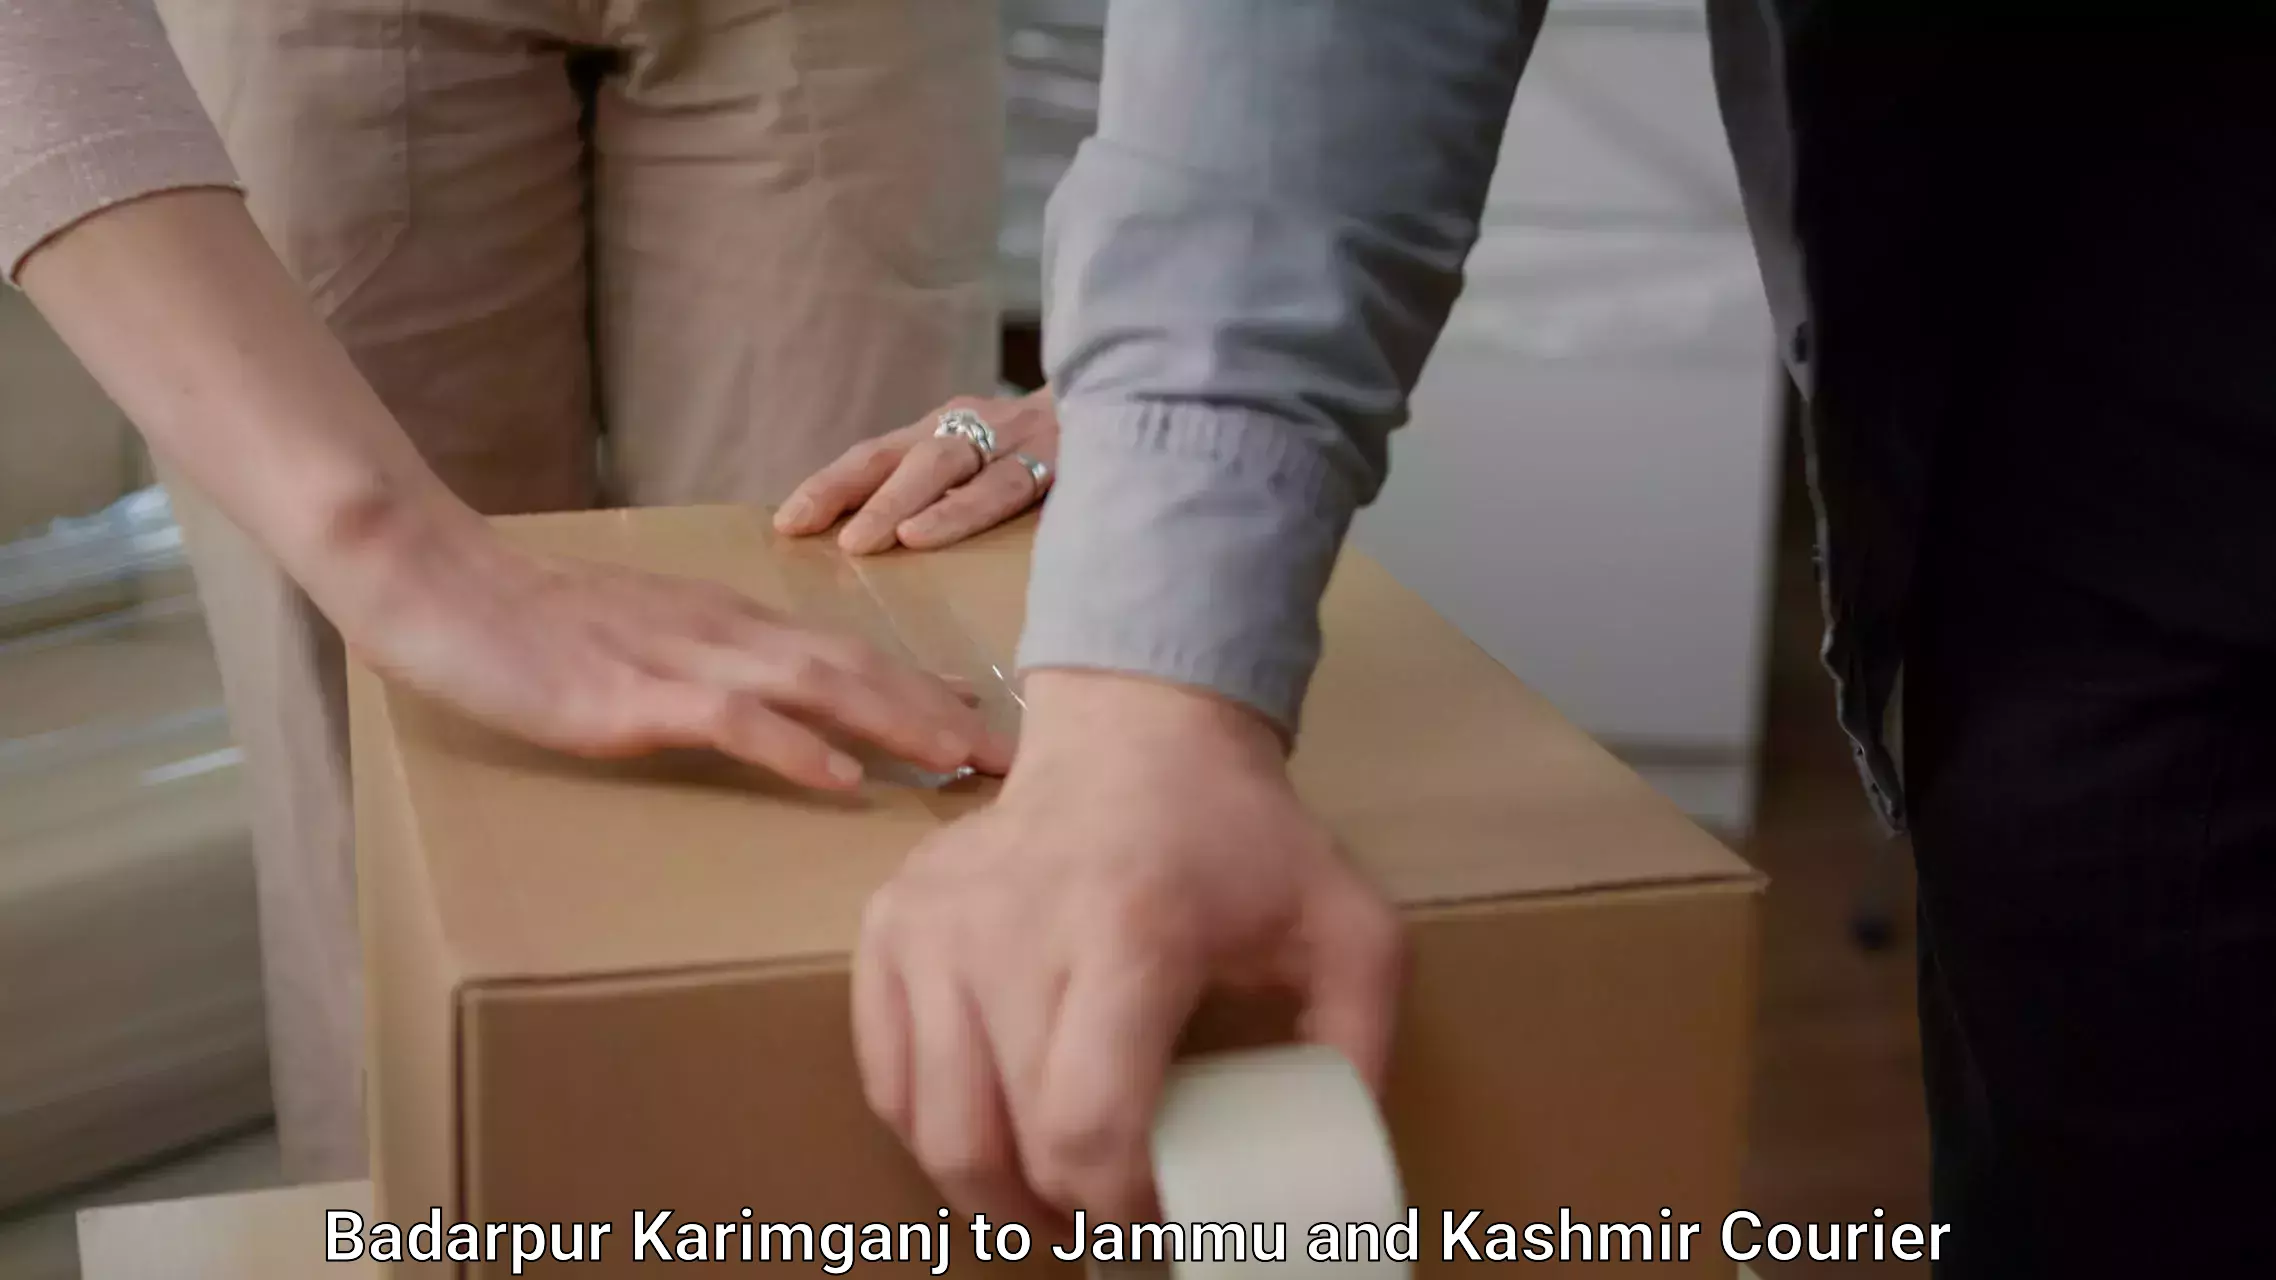 Specialized moving company Badarpur Karimganj to Jammu and Kashmir